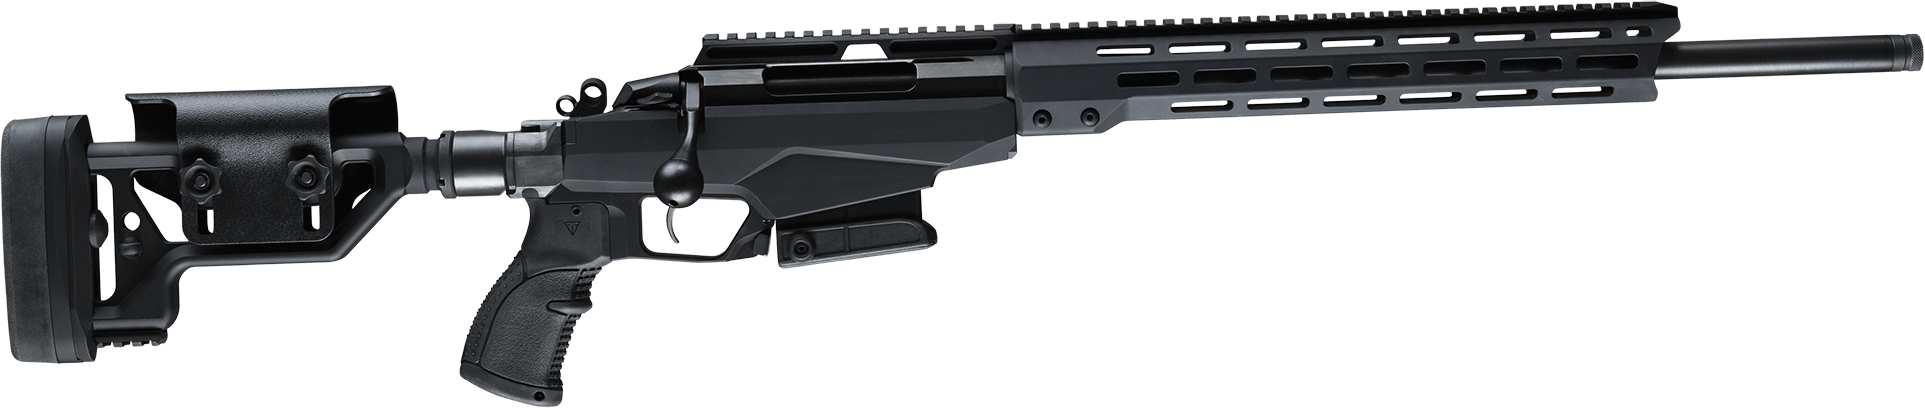 Tikka T3x TAC A1 Tactical Rifle